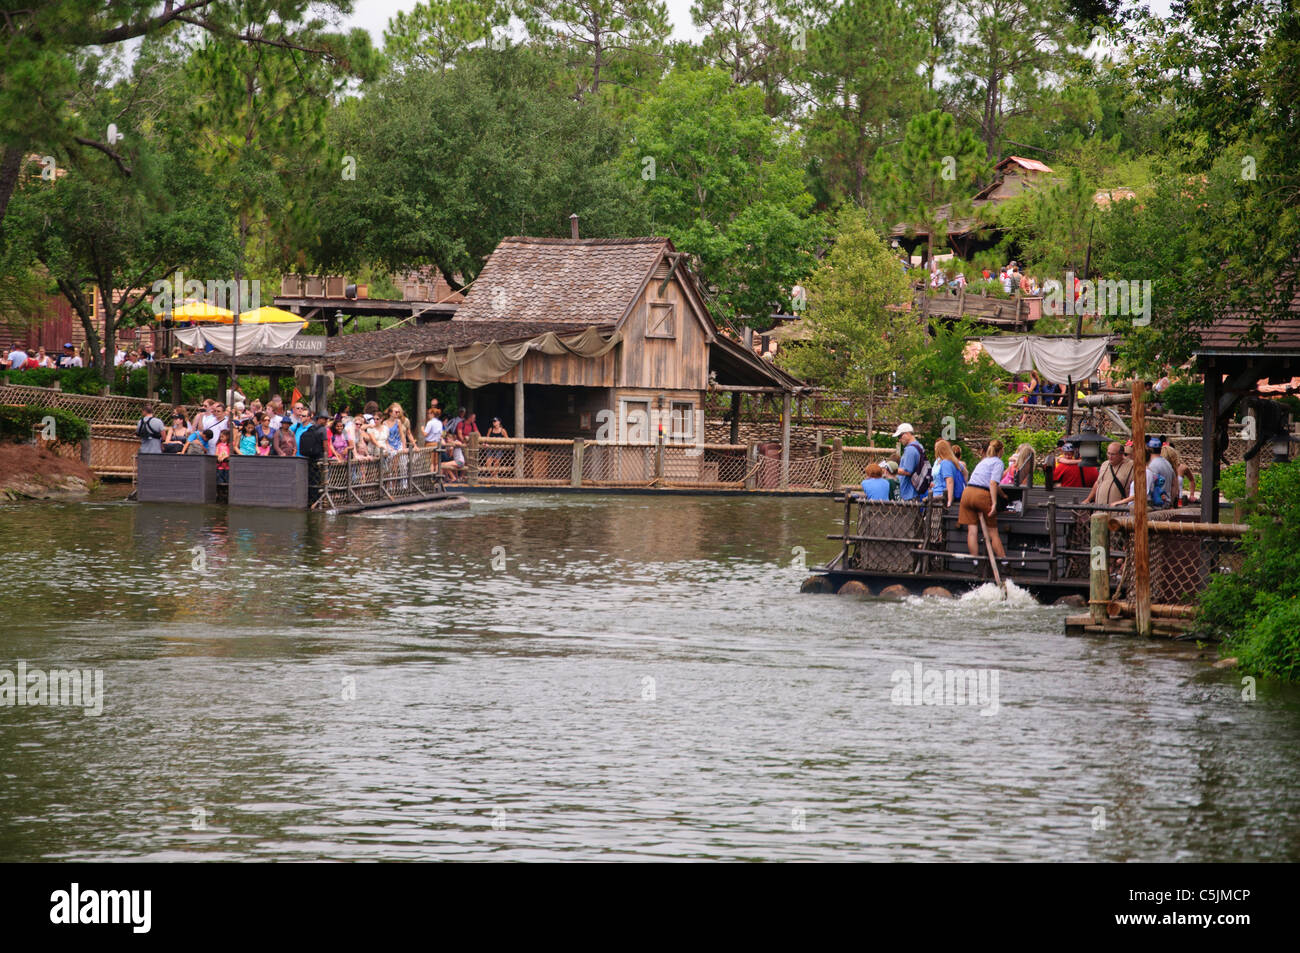 Tom Sawyer island Magic Kingdom parcs de Walt Disney World Resort Orlando, Floride Banque D'Images